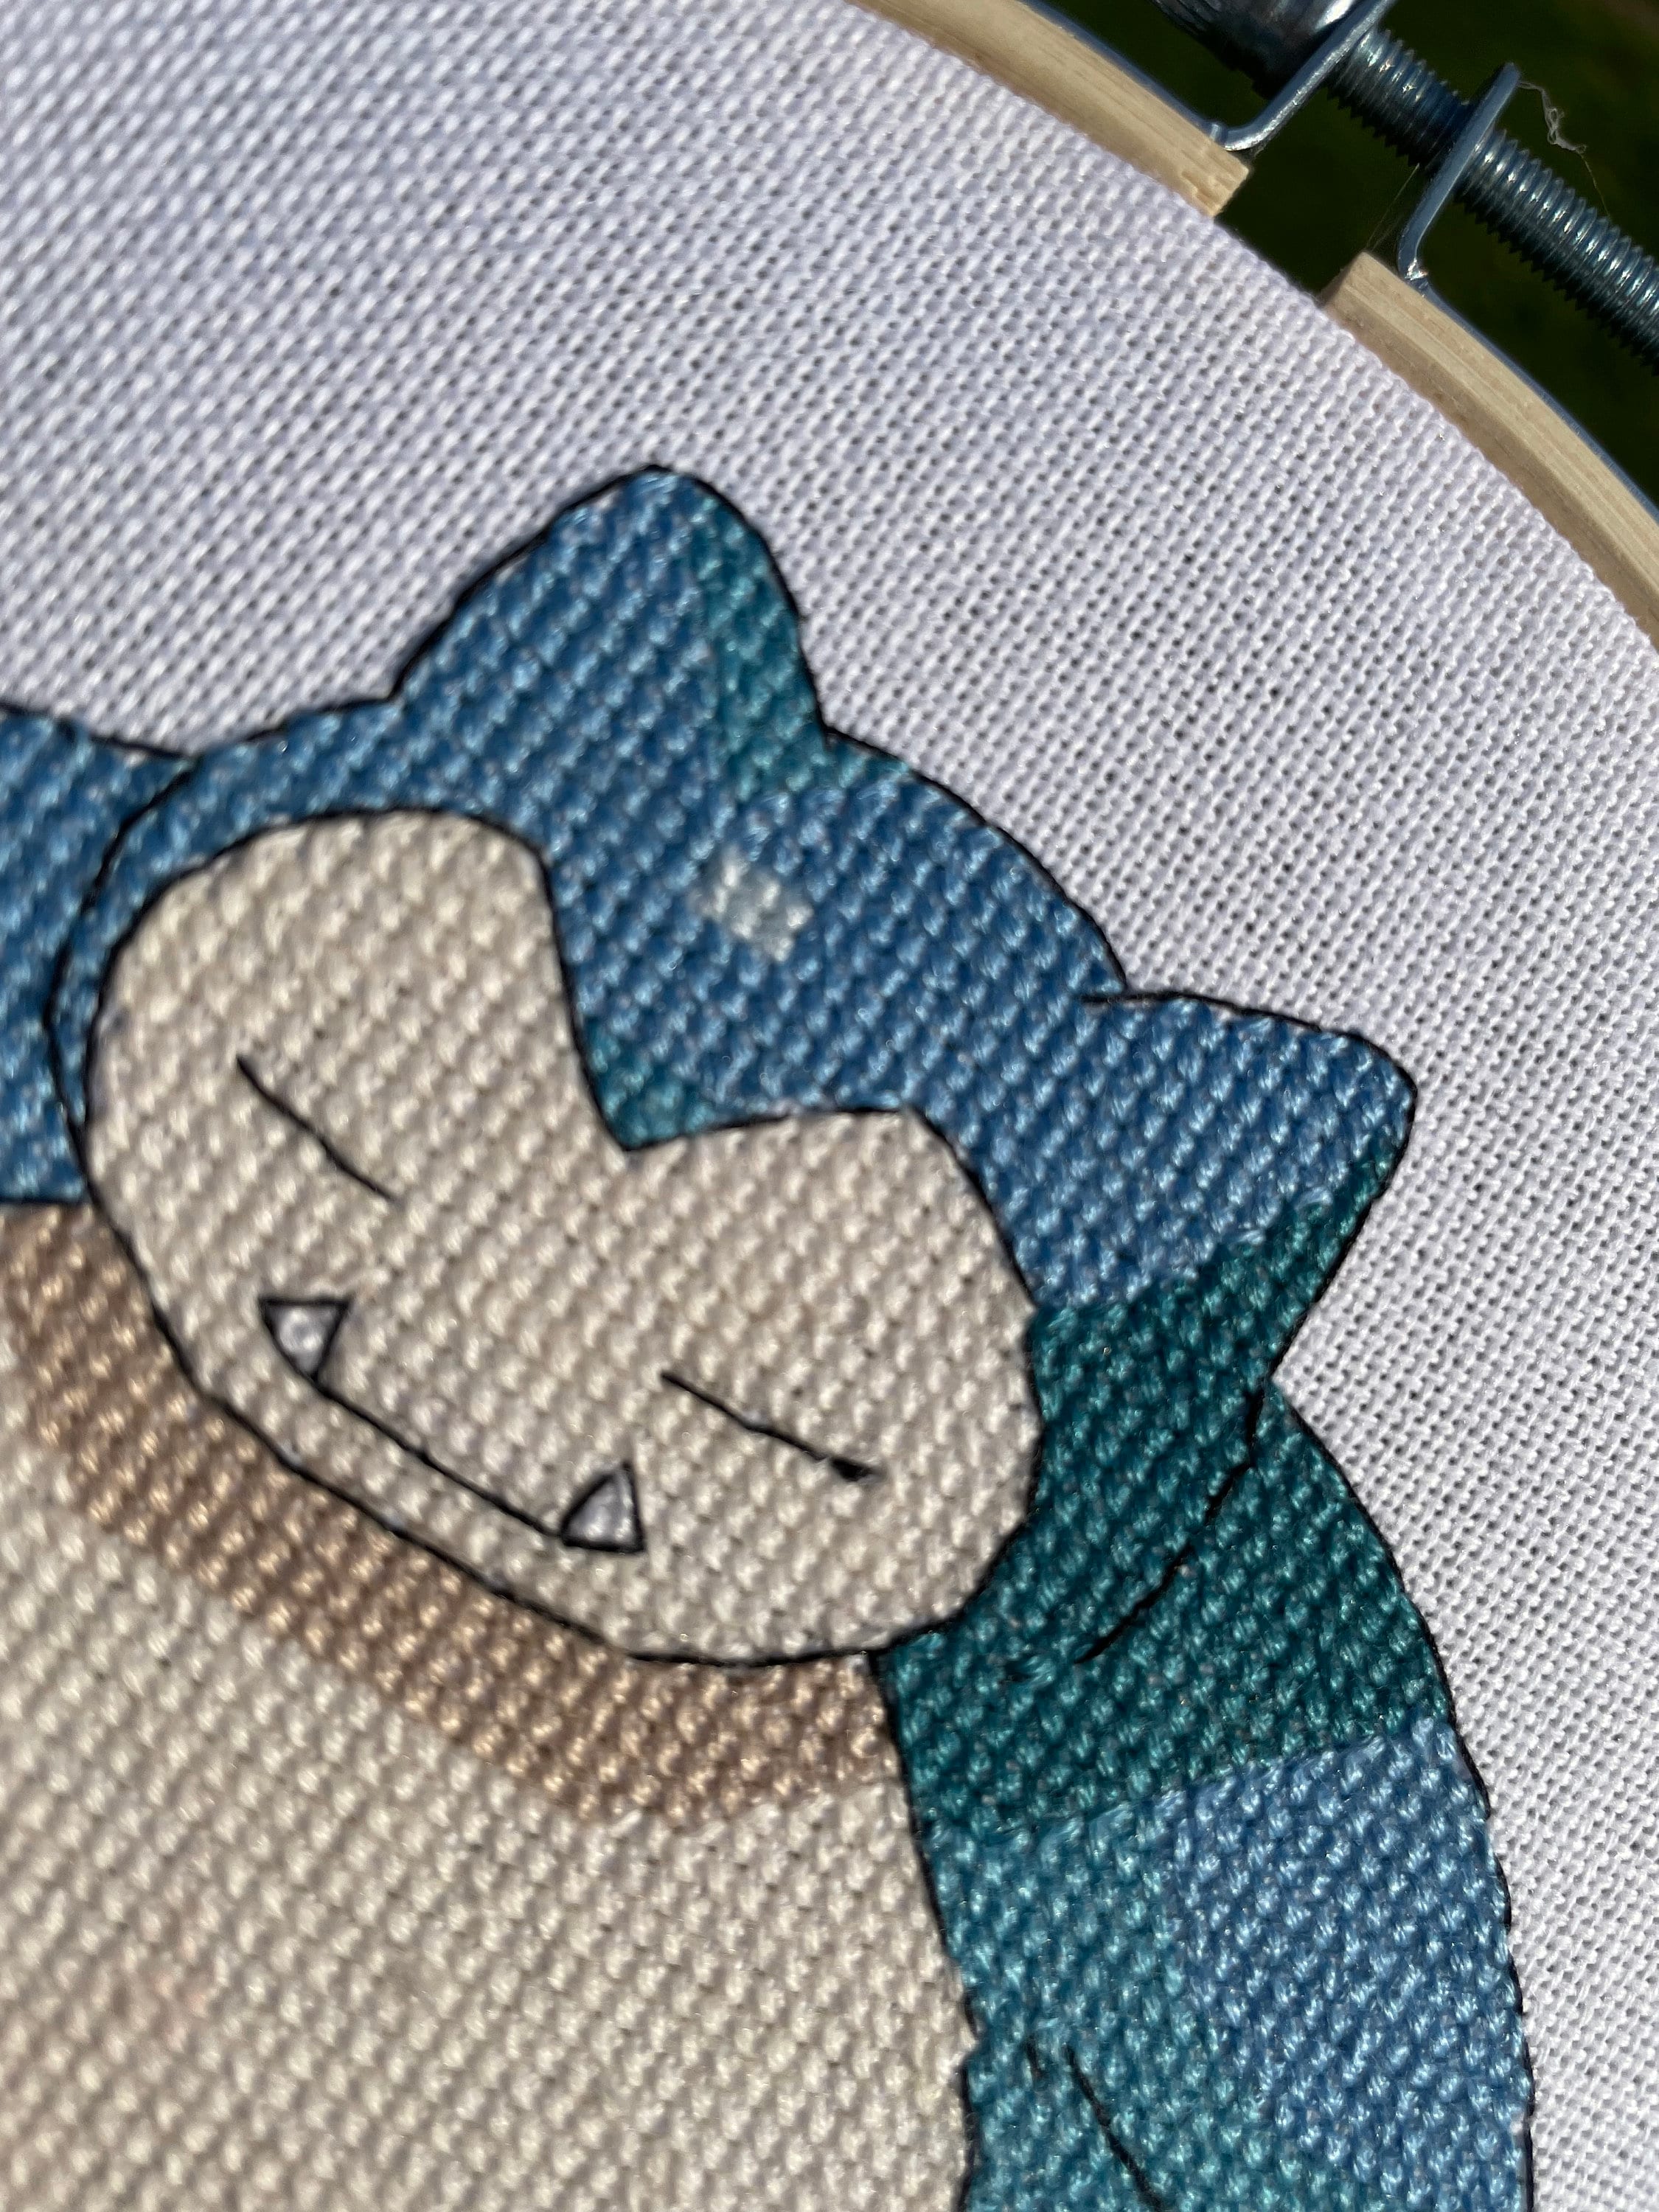 Buzy Bobbins: Emolga - Pokemon Cross stitch design